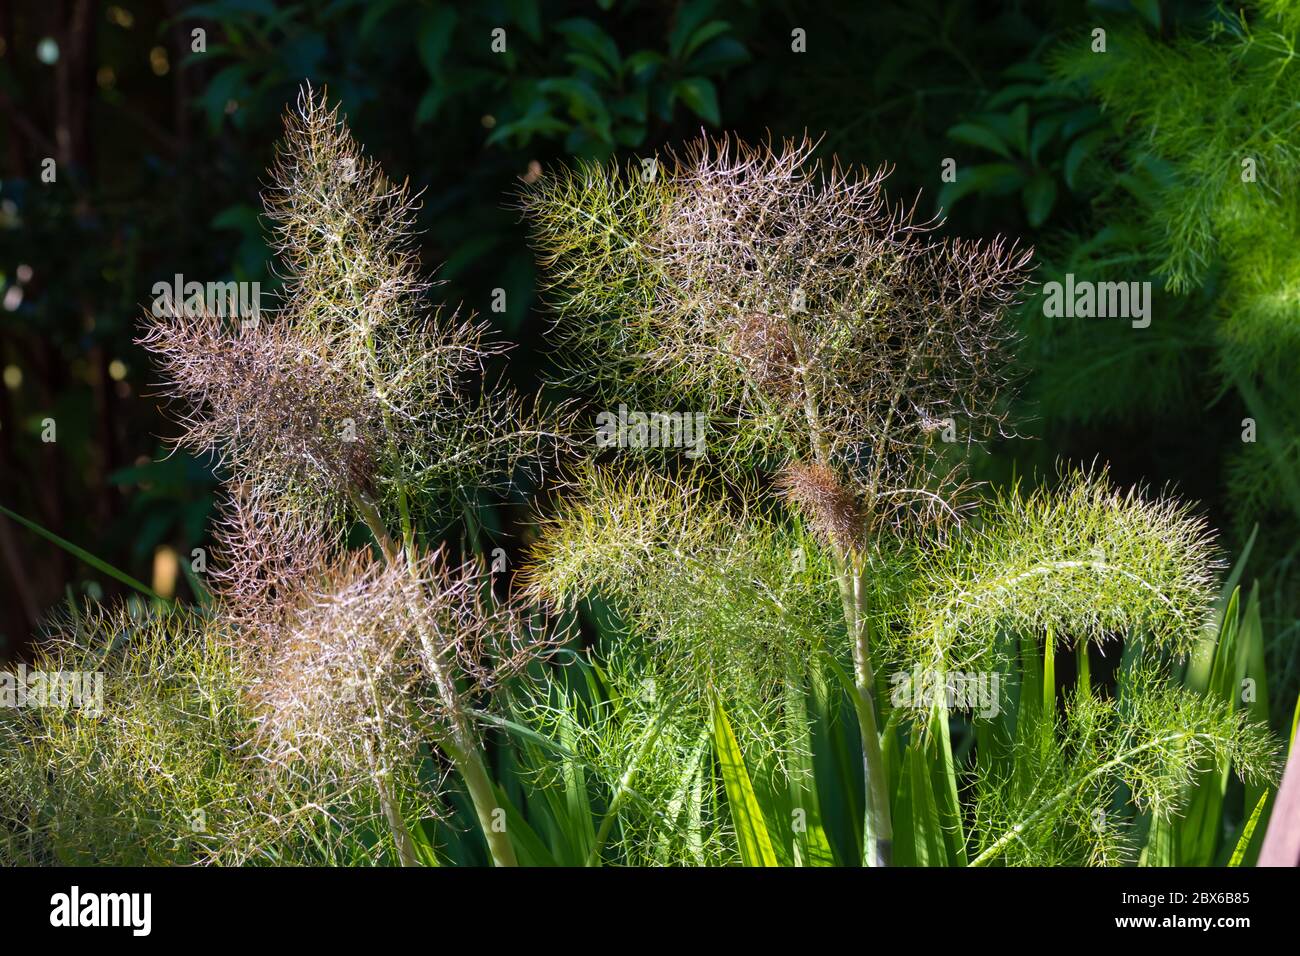 Foeniculum vulgare 'Purpureum' bronze fennel growing in a Scottish garden. Stock Photo